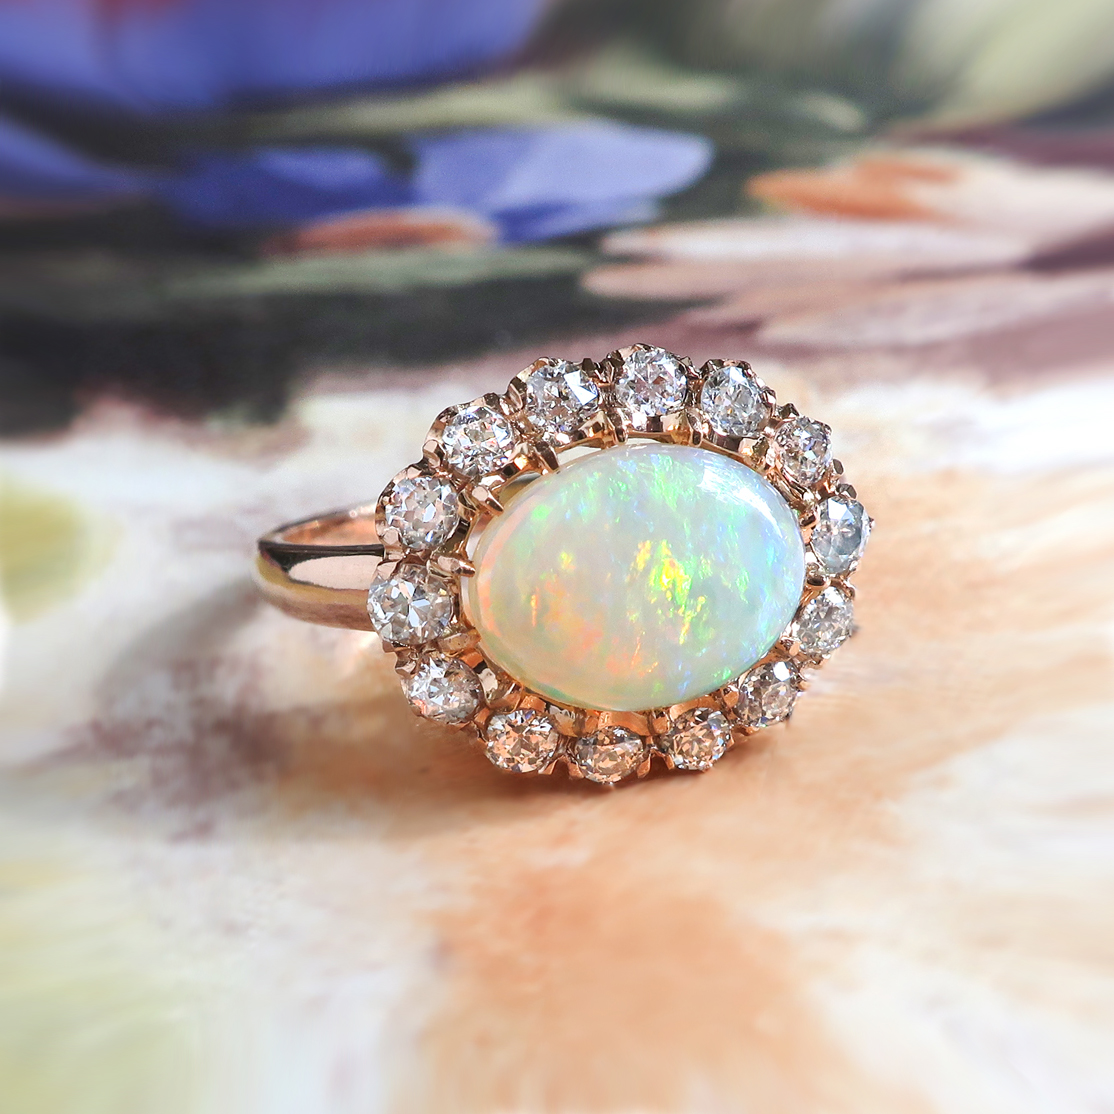 My vintage Opal rings! : r/jewelry